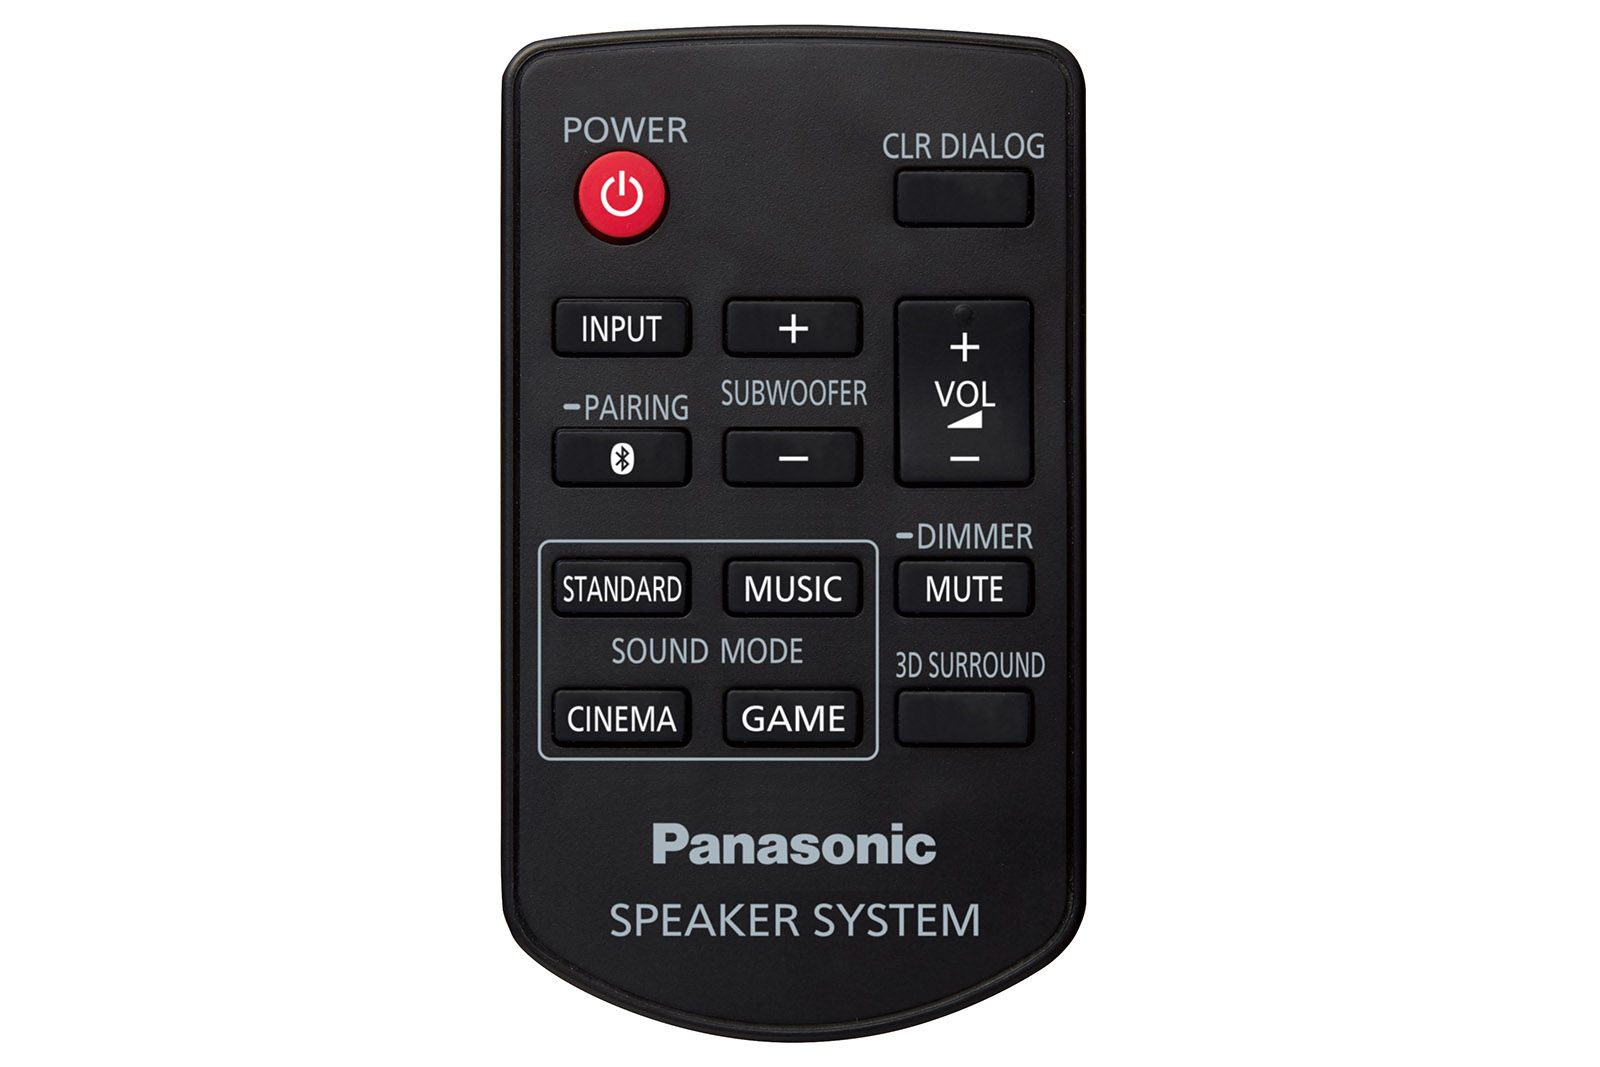 Panasonic Soundslayer SC-HTB01 review photo 5